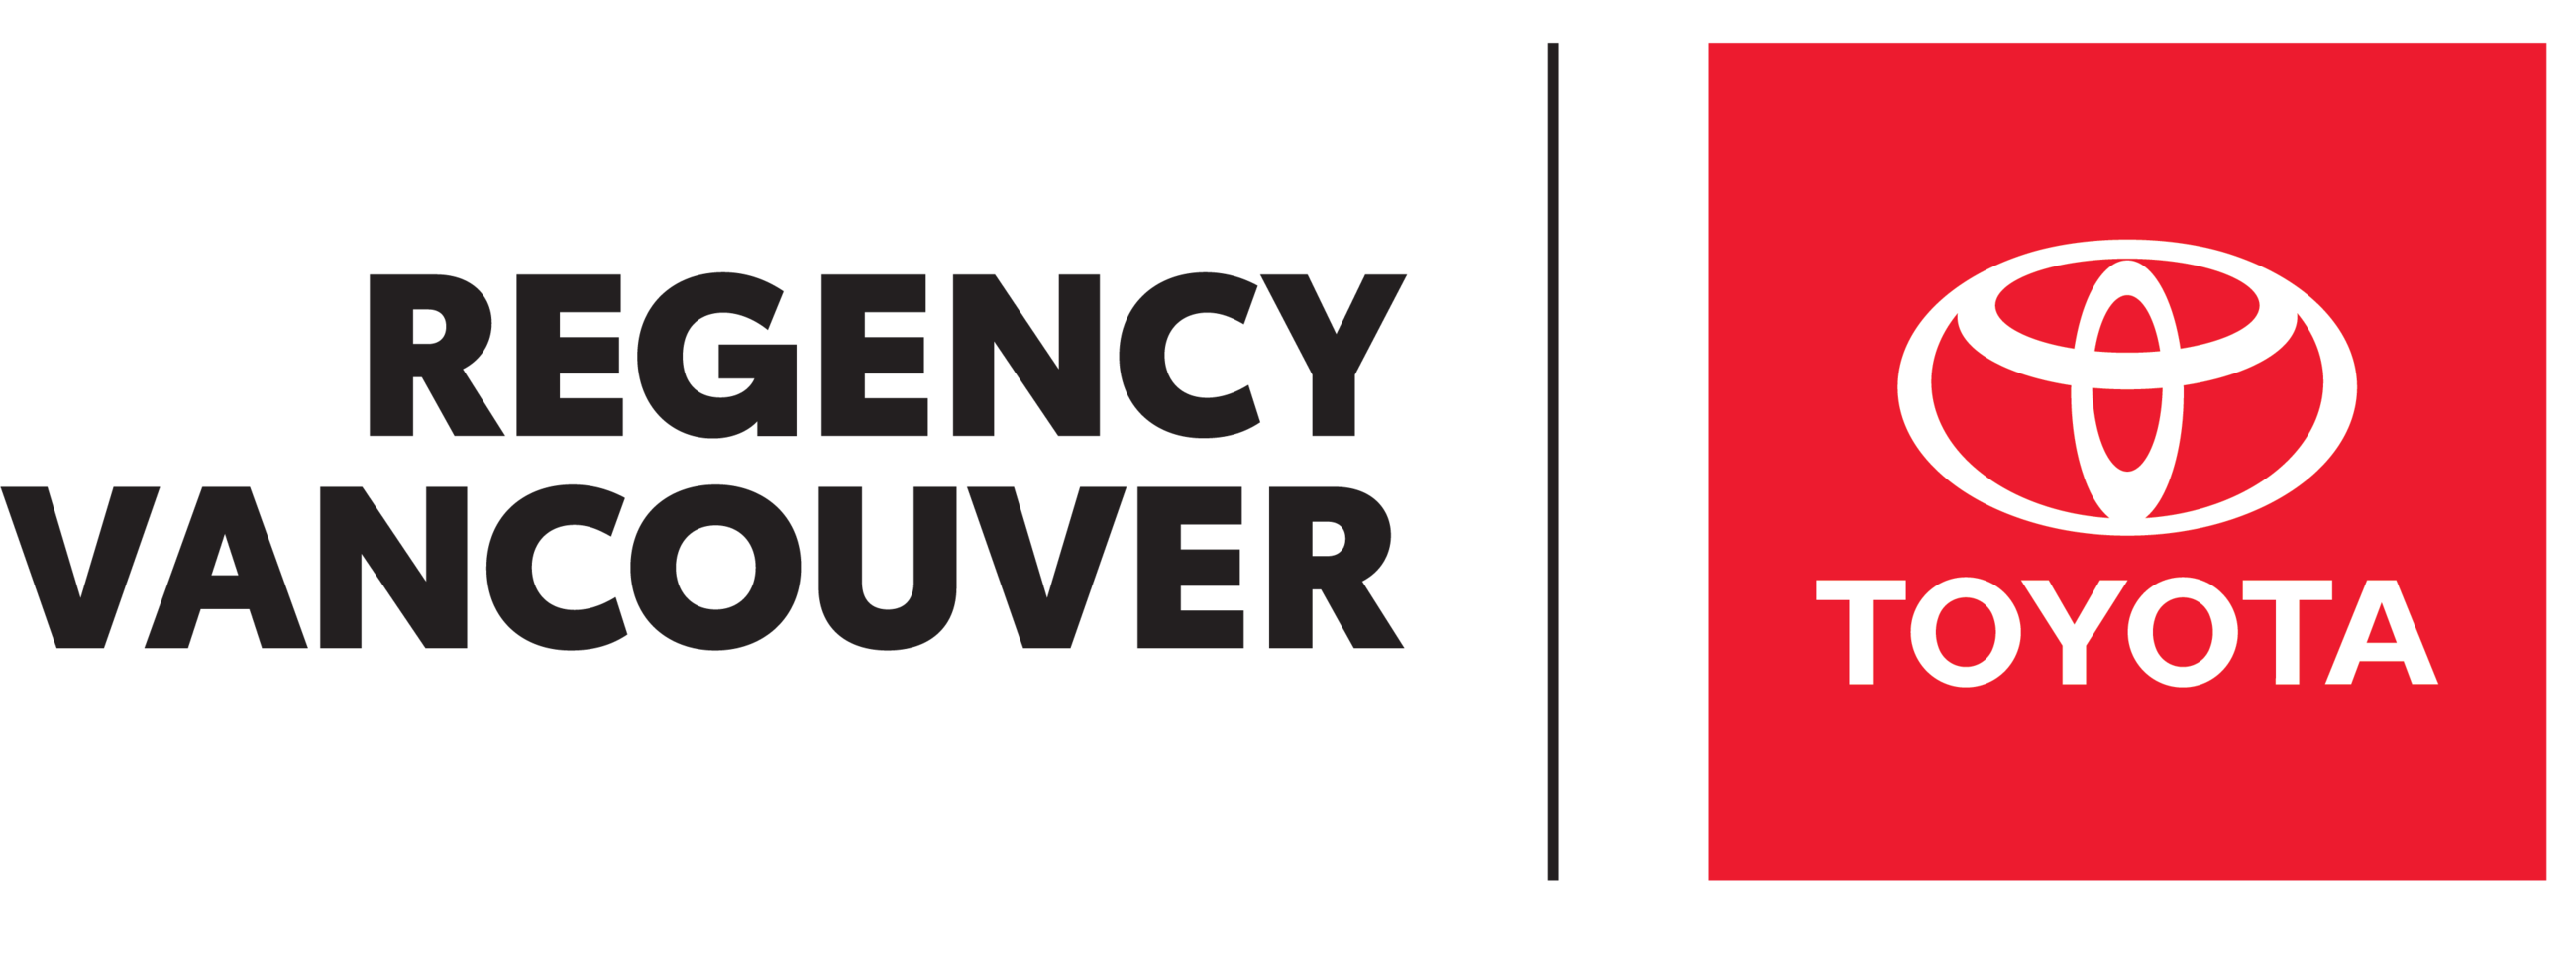 Regency Toyota Vancouver Logo